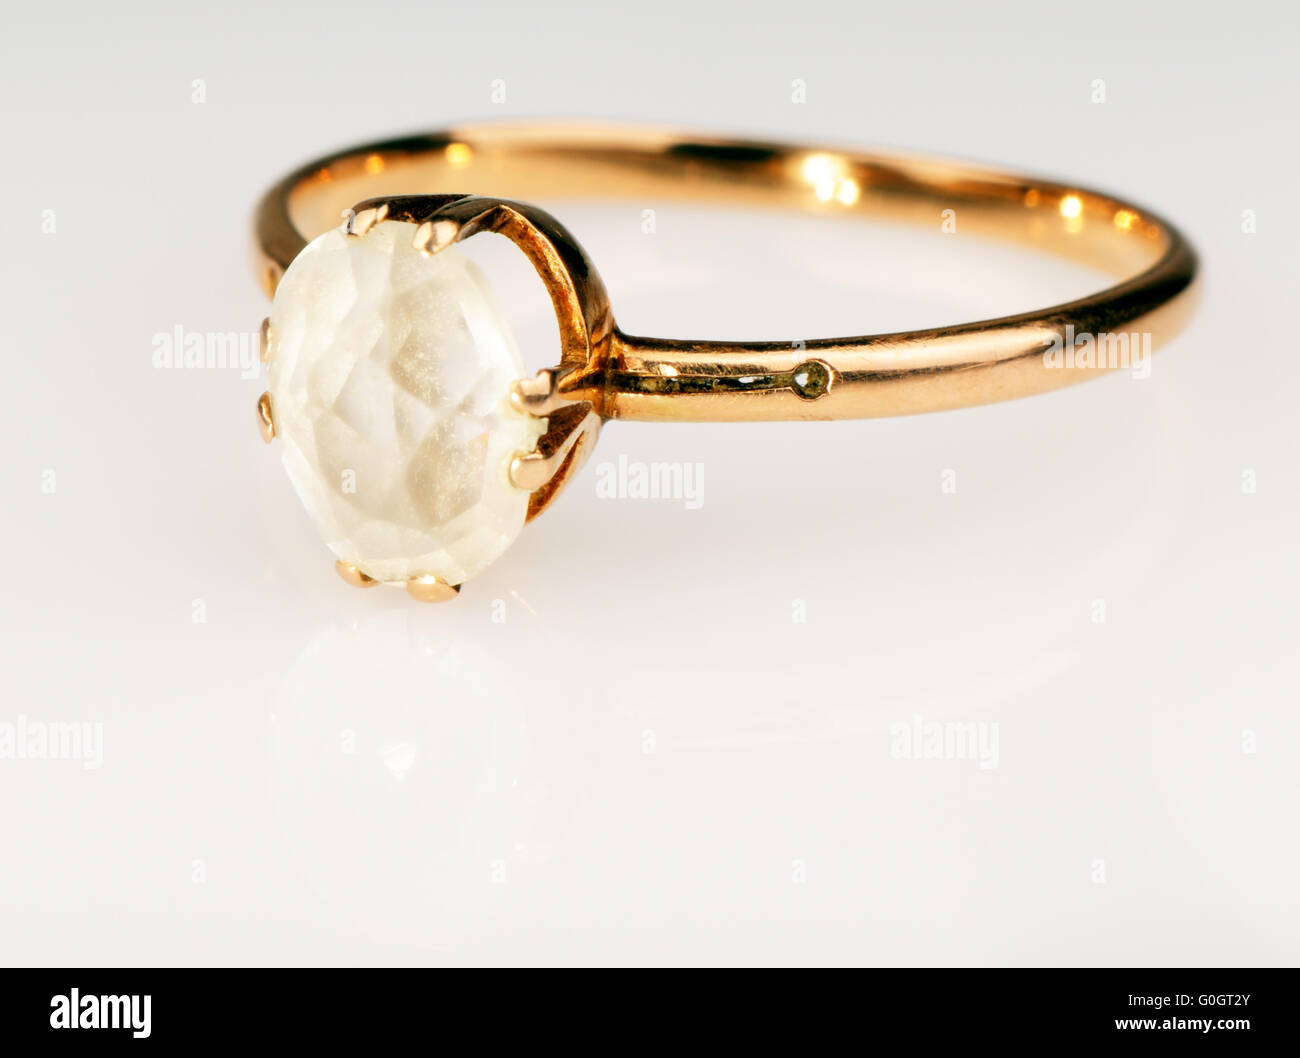 White Ladies Rings Square Silver Stone Finger Zircon Ring for Women sizes O  Q | eBay